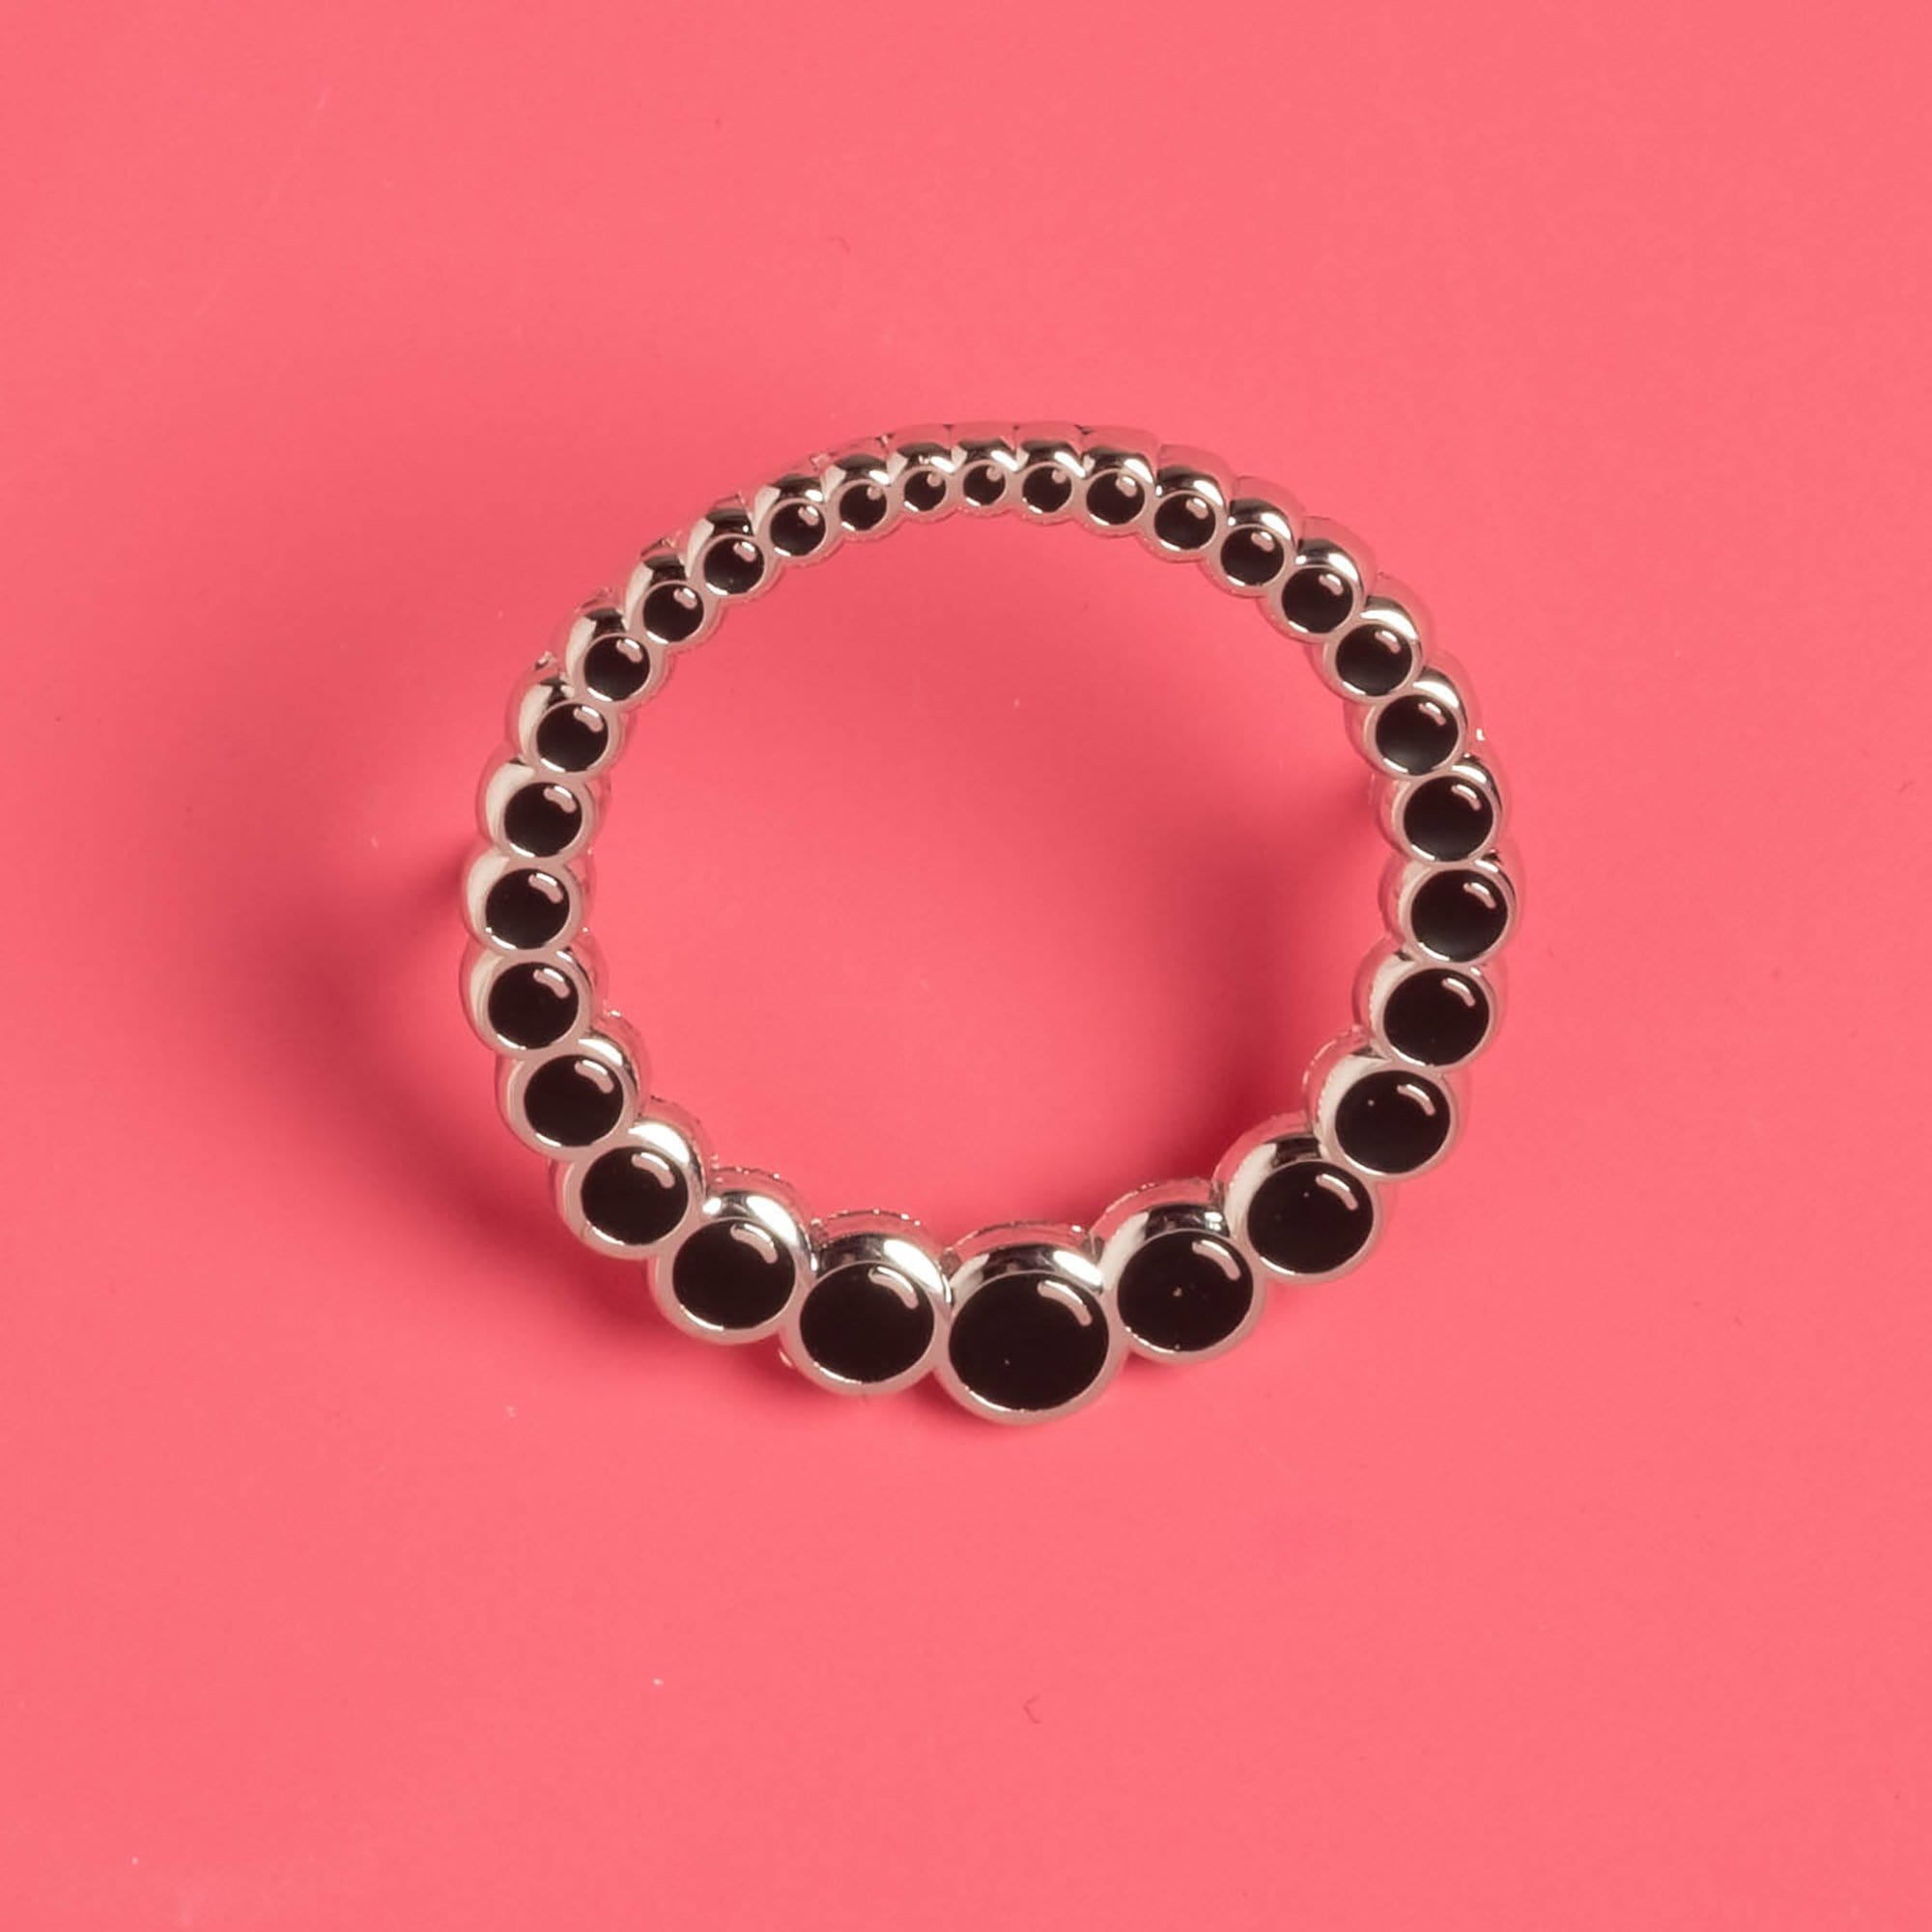 Kamala Harris' Black Pearls Pin